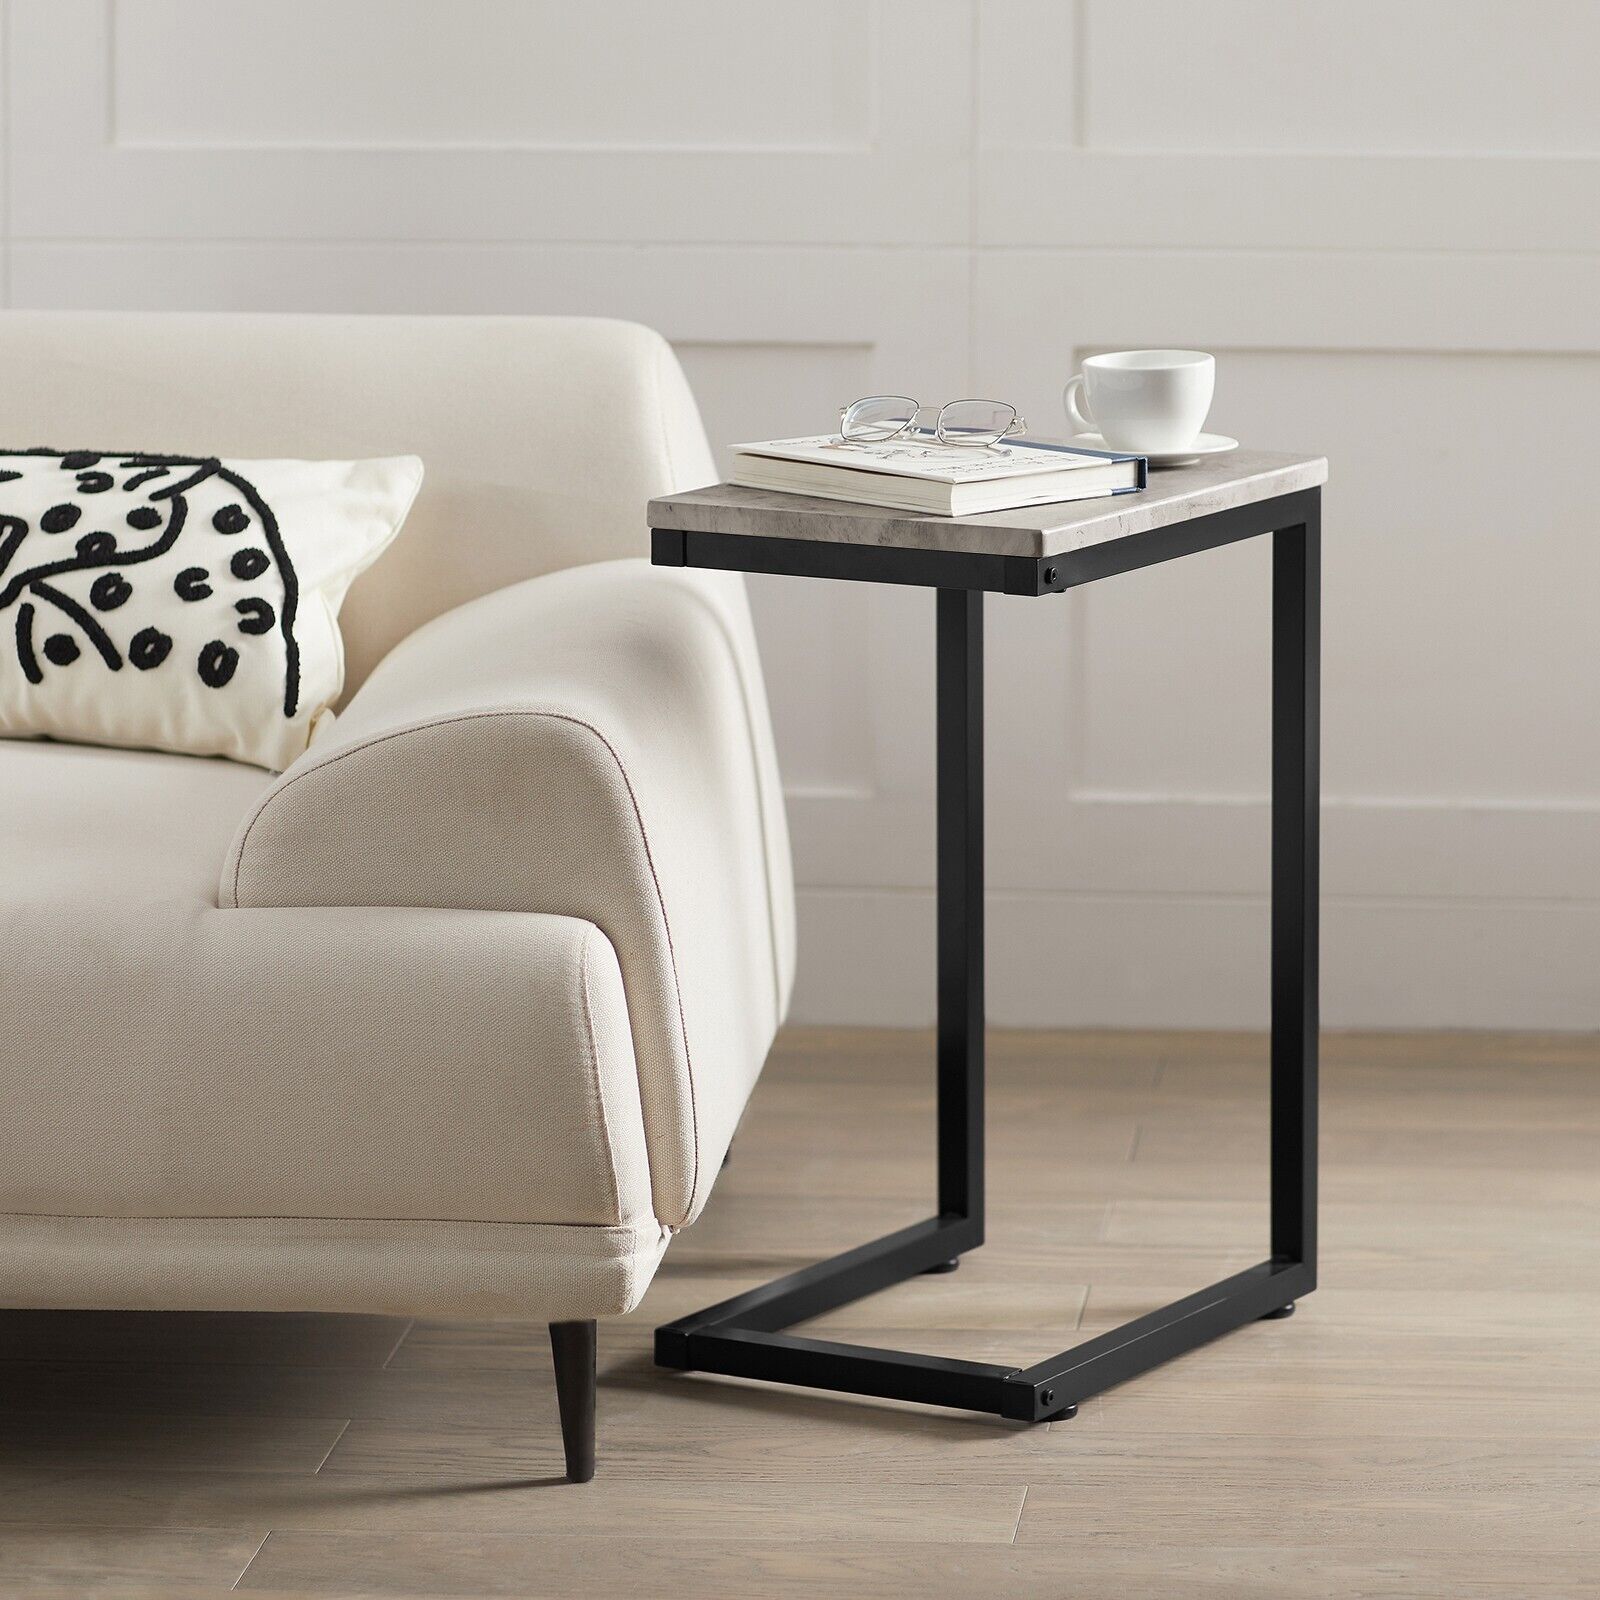 30x60x40cm Coffee Table Side Table Living Room Sofa Table